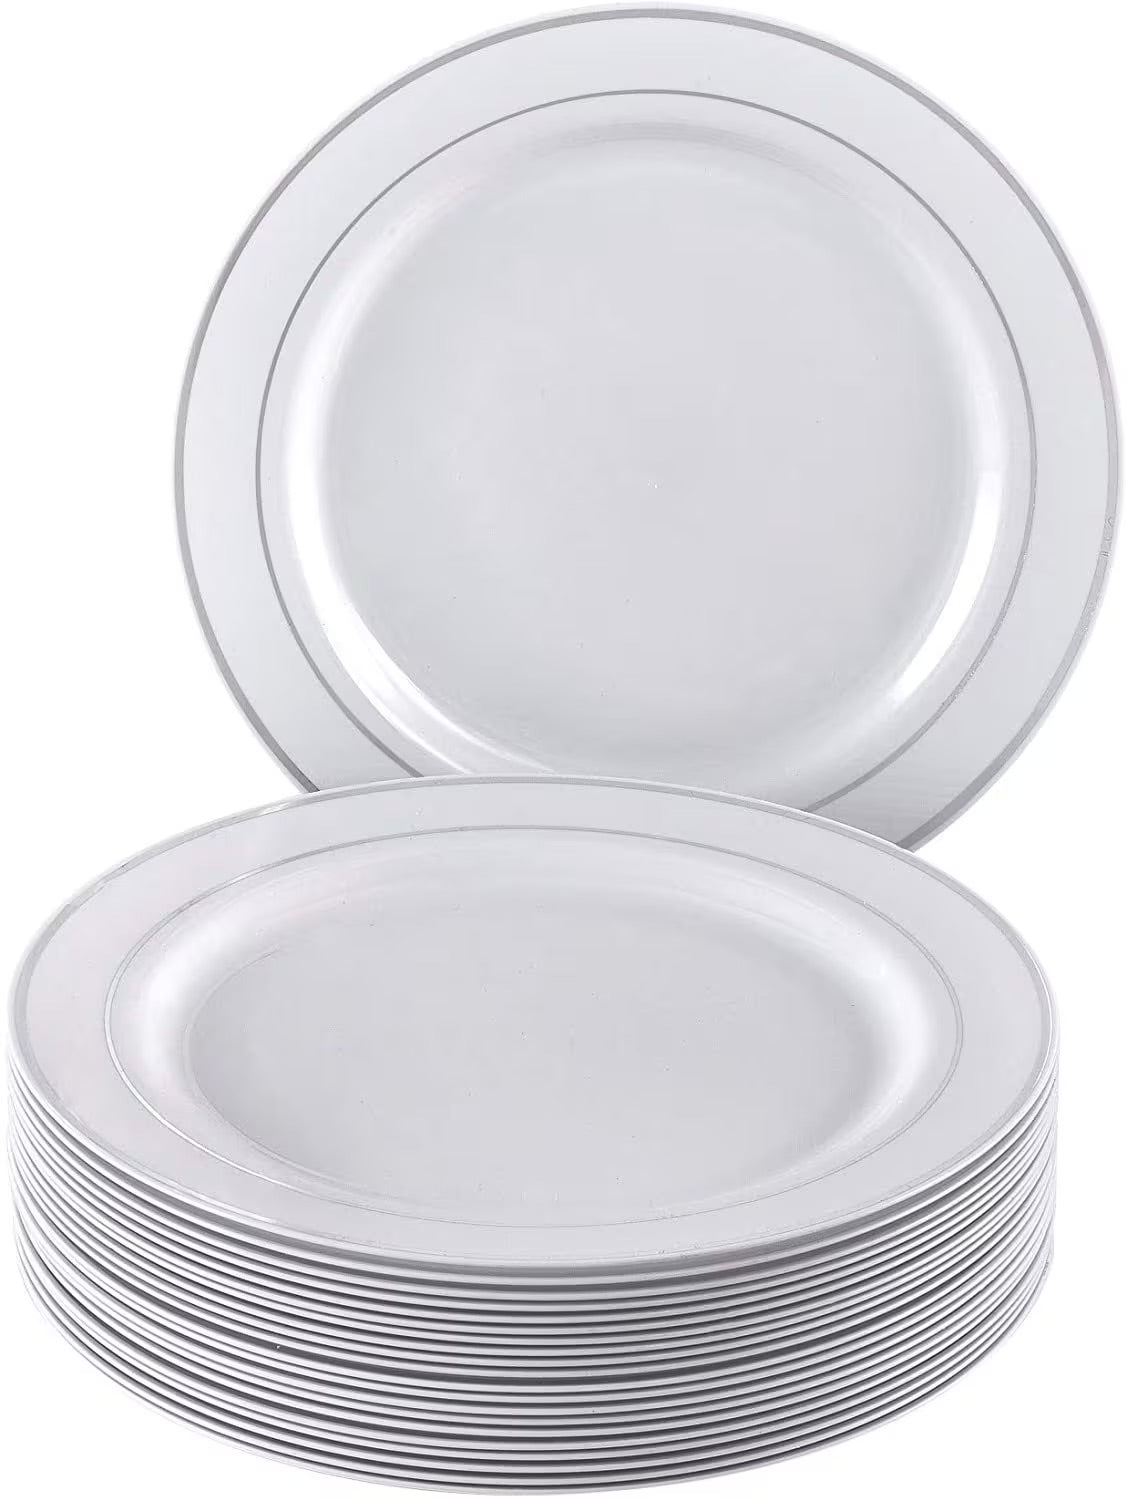 25pcs Premium Silver Brim Plastic Plates for Weddings